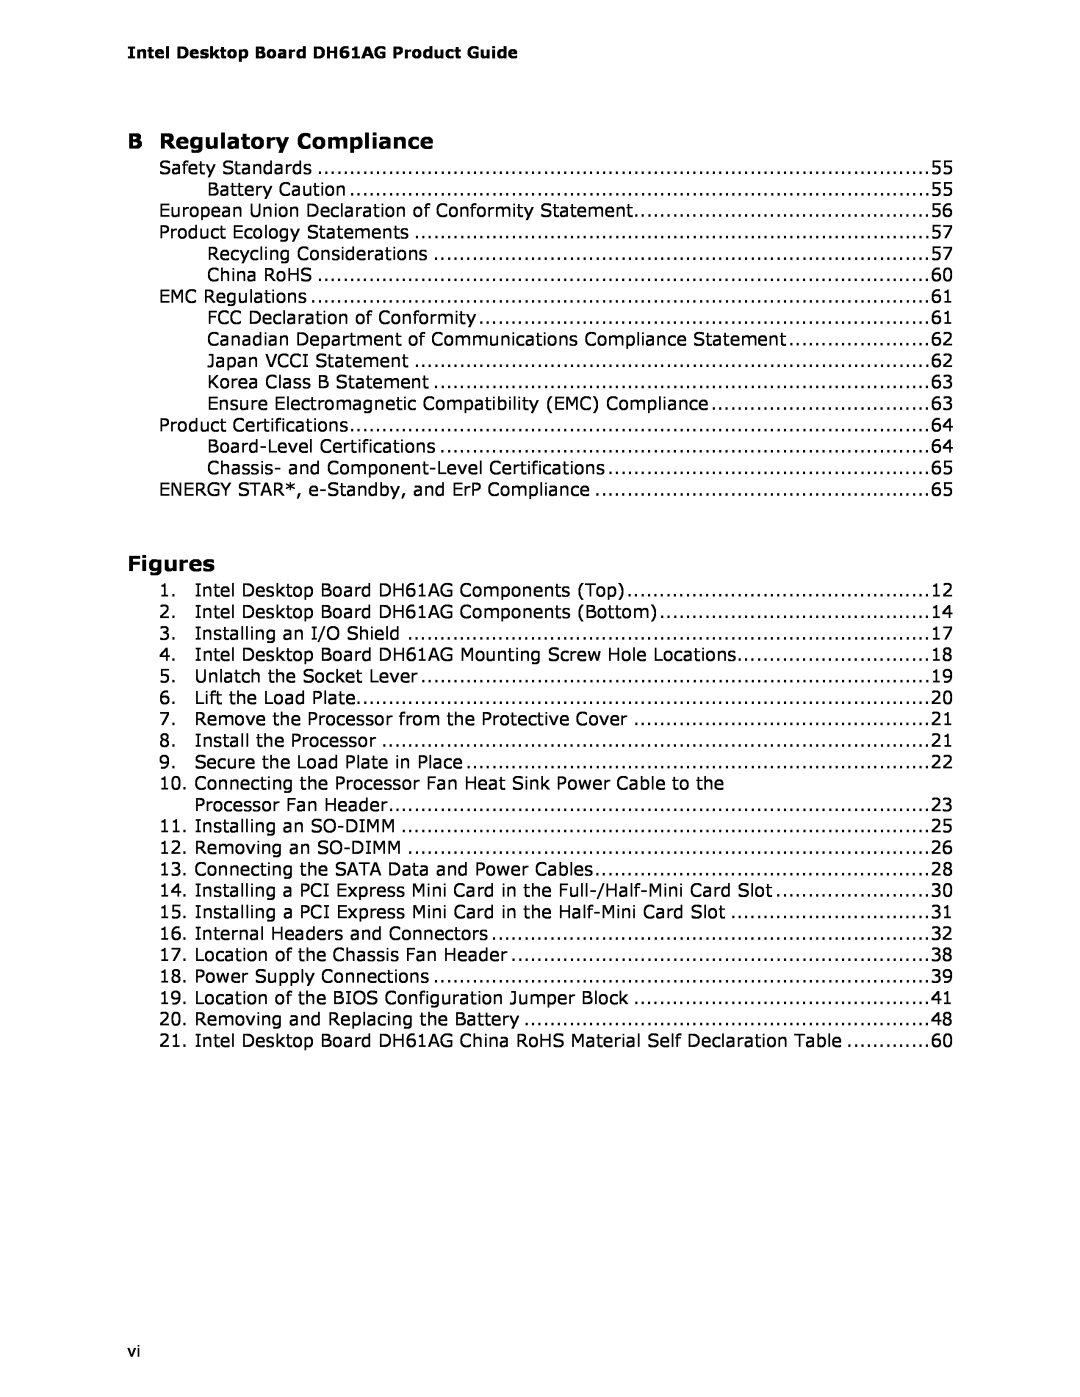 Intel BOXDH61AG manual B Regulatory Compliance, Figures 